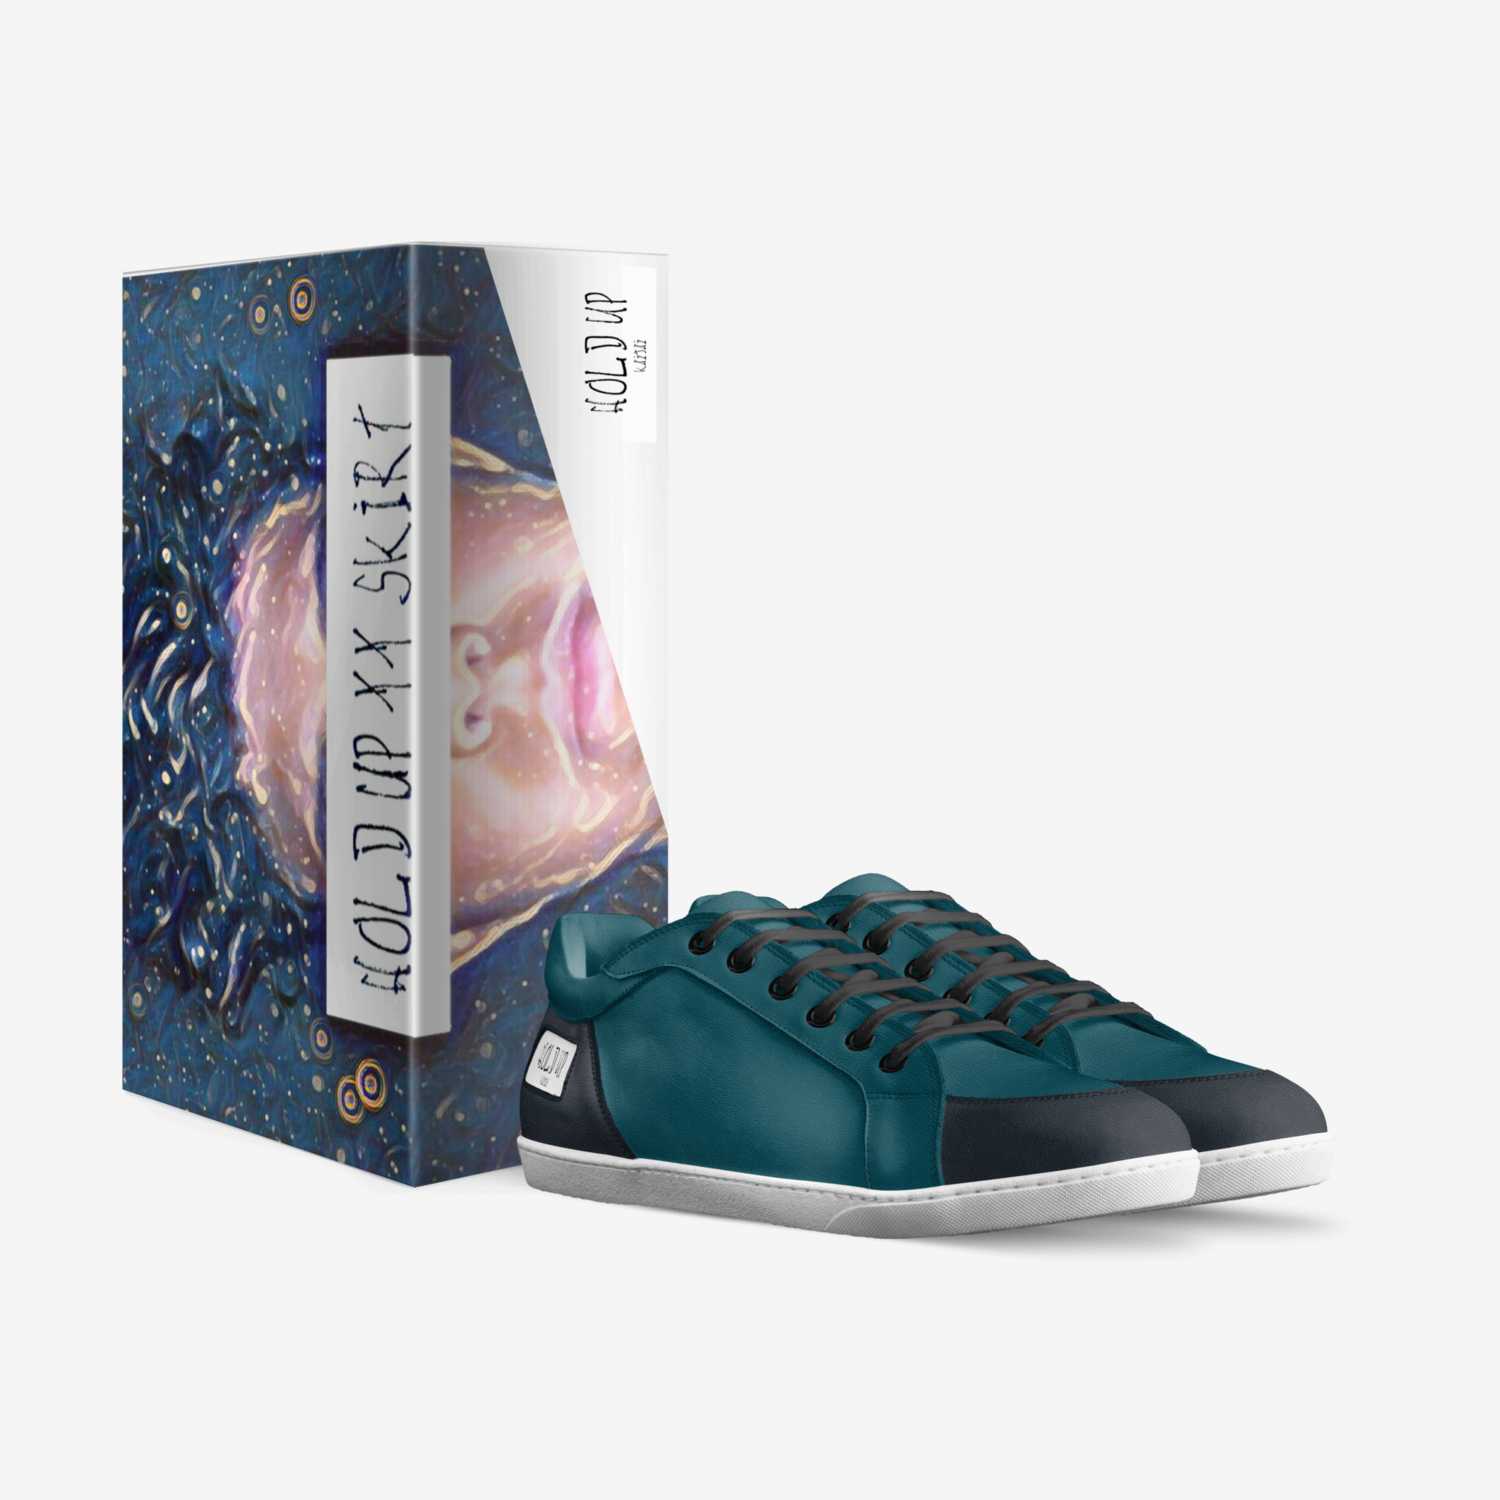 KaiJai "HOLD UP"  custom made in Italy shoes by Keaton Jones | Box view